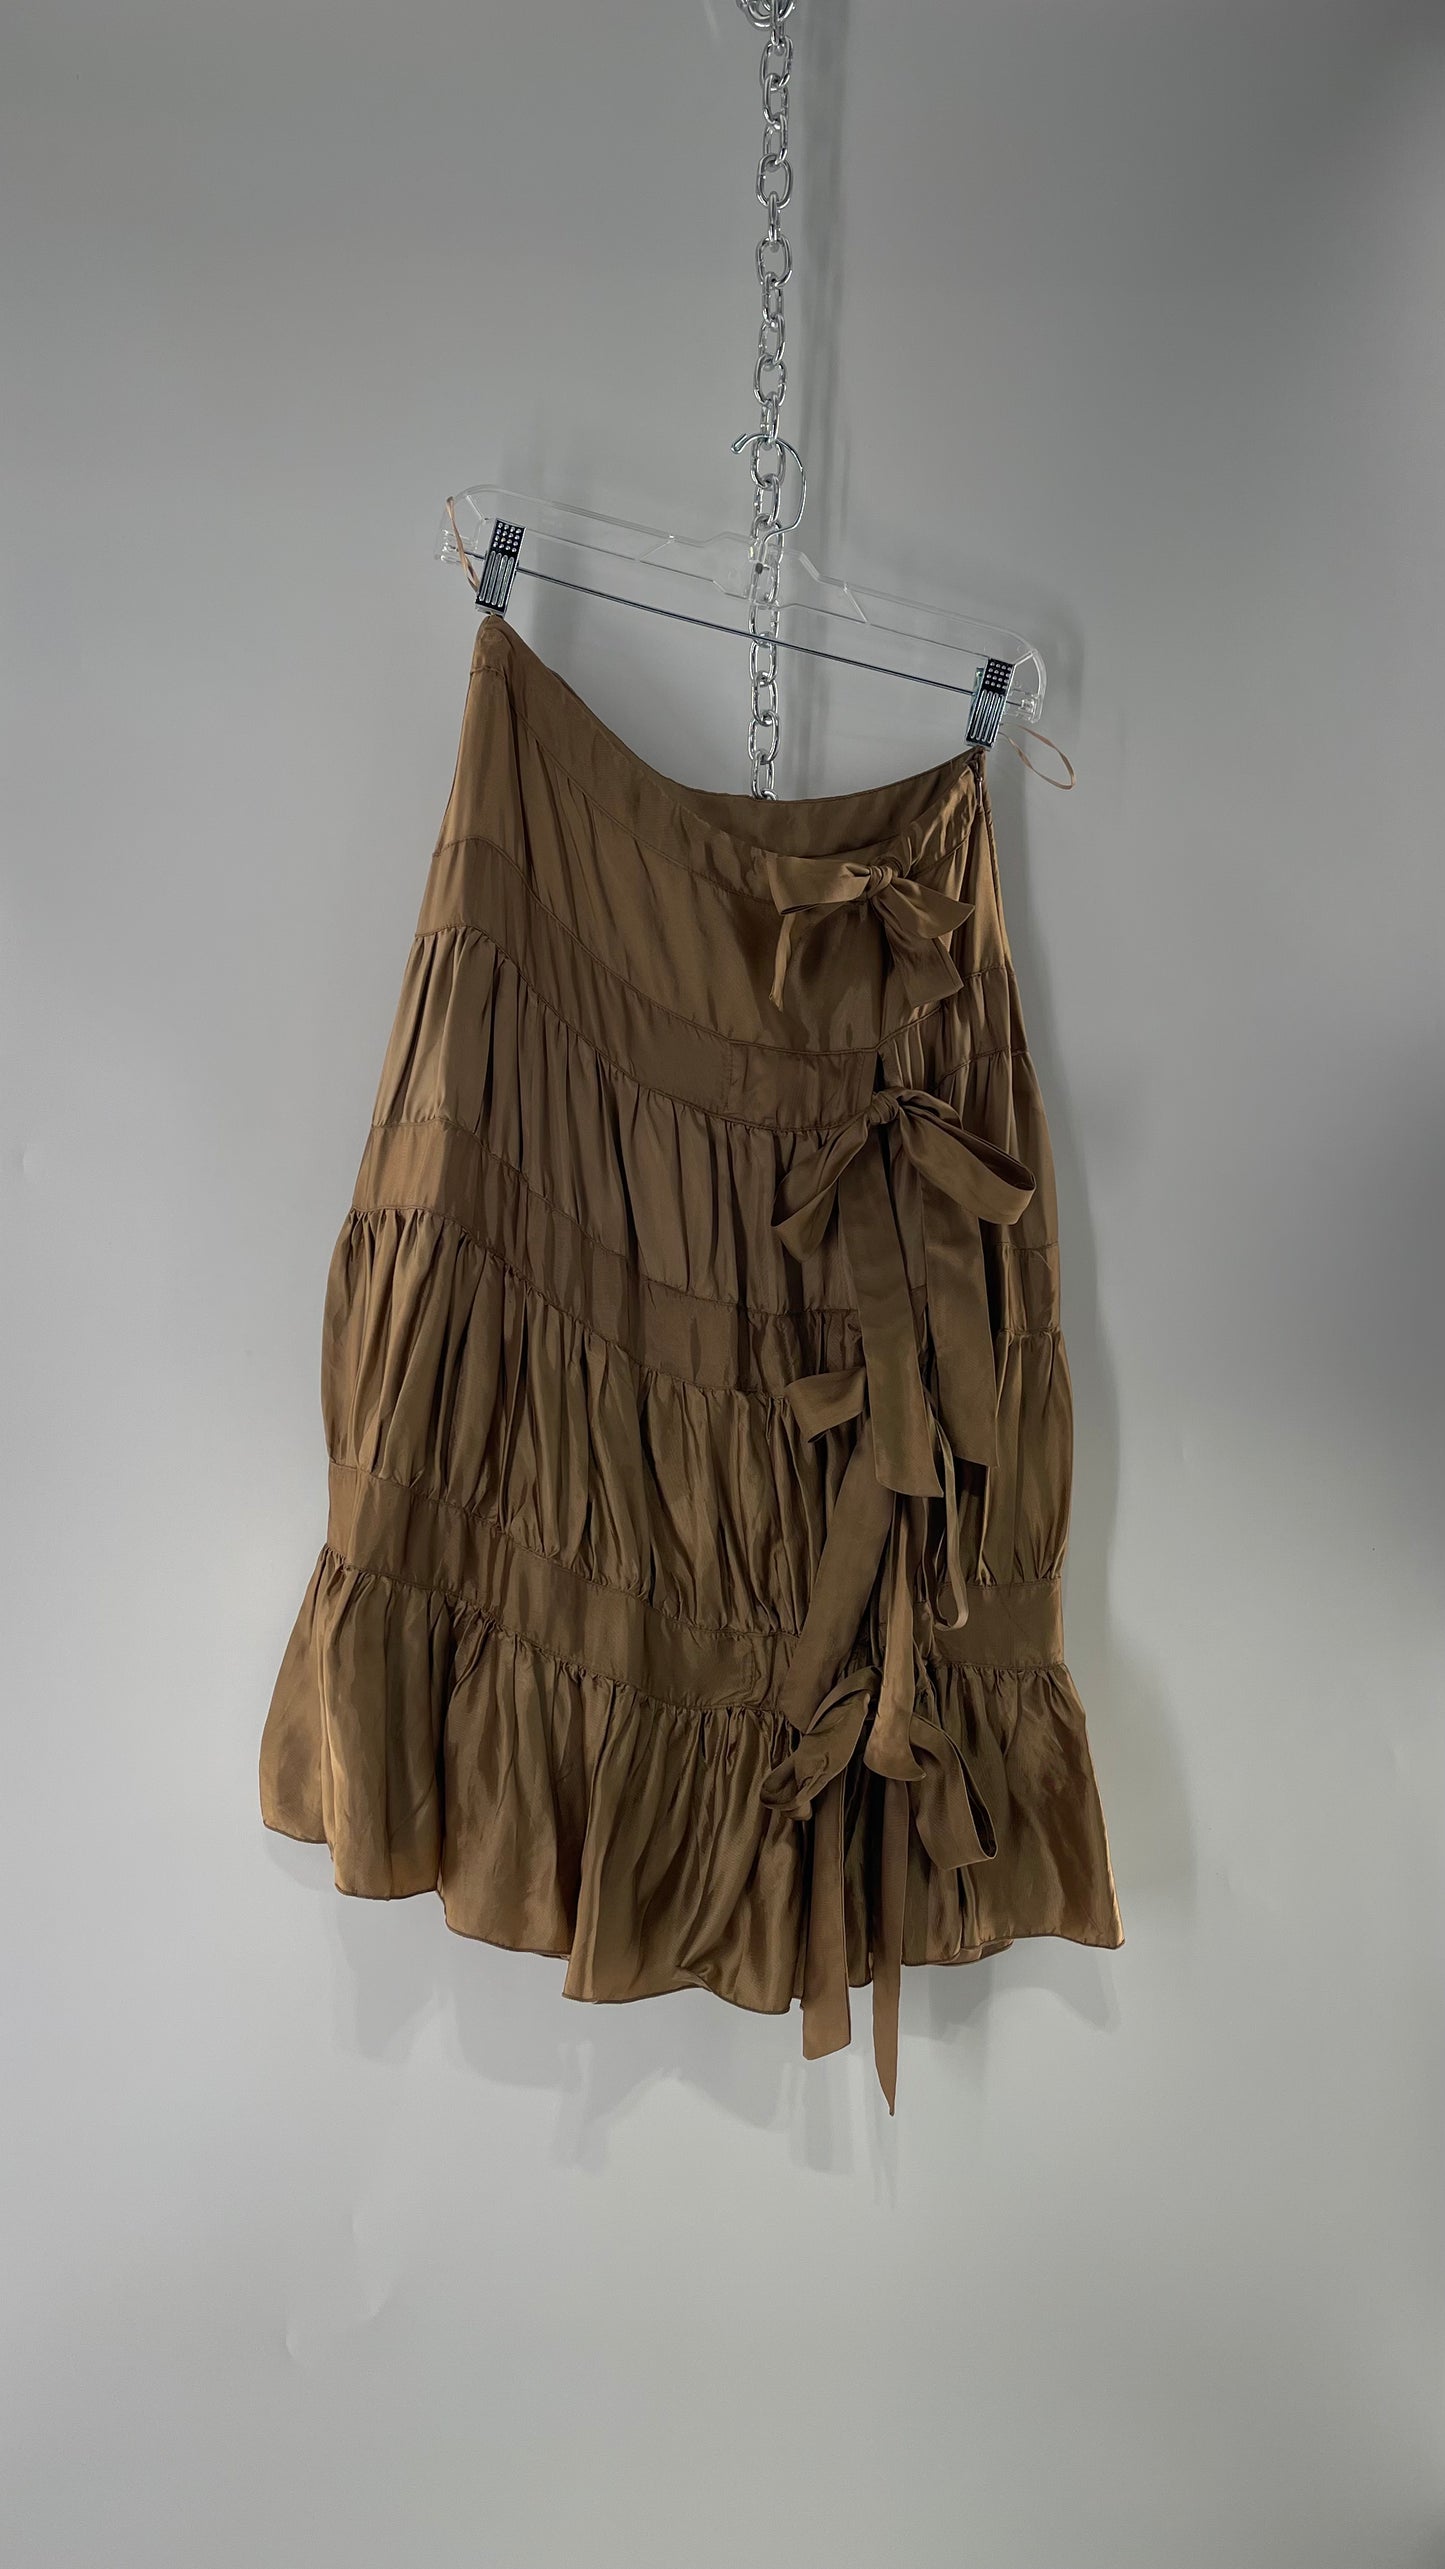 Ysatis Greece  Bronze Metallic Fabric Skirt with Dainty Feminine Bow Detailing on Side (1)